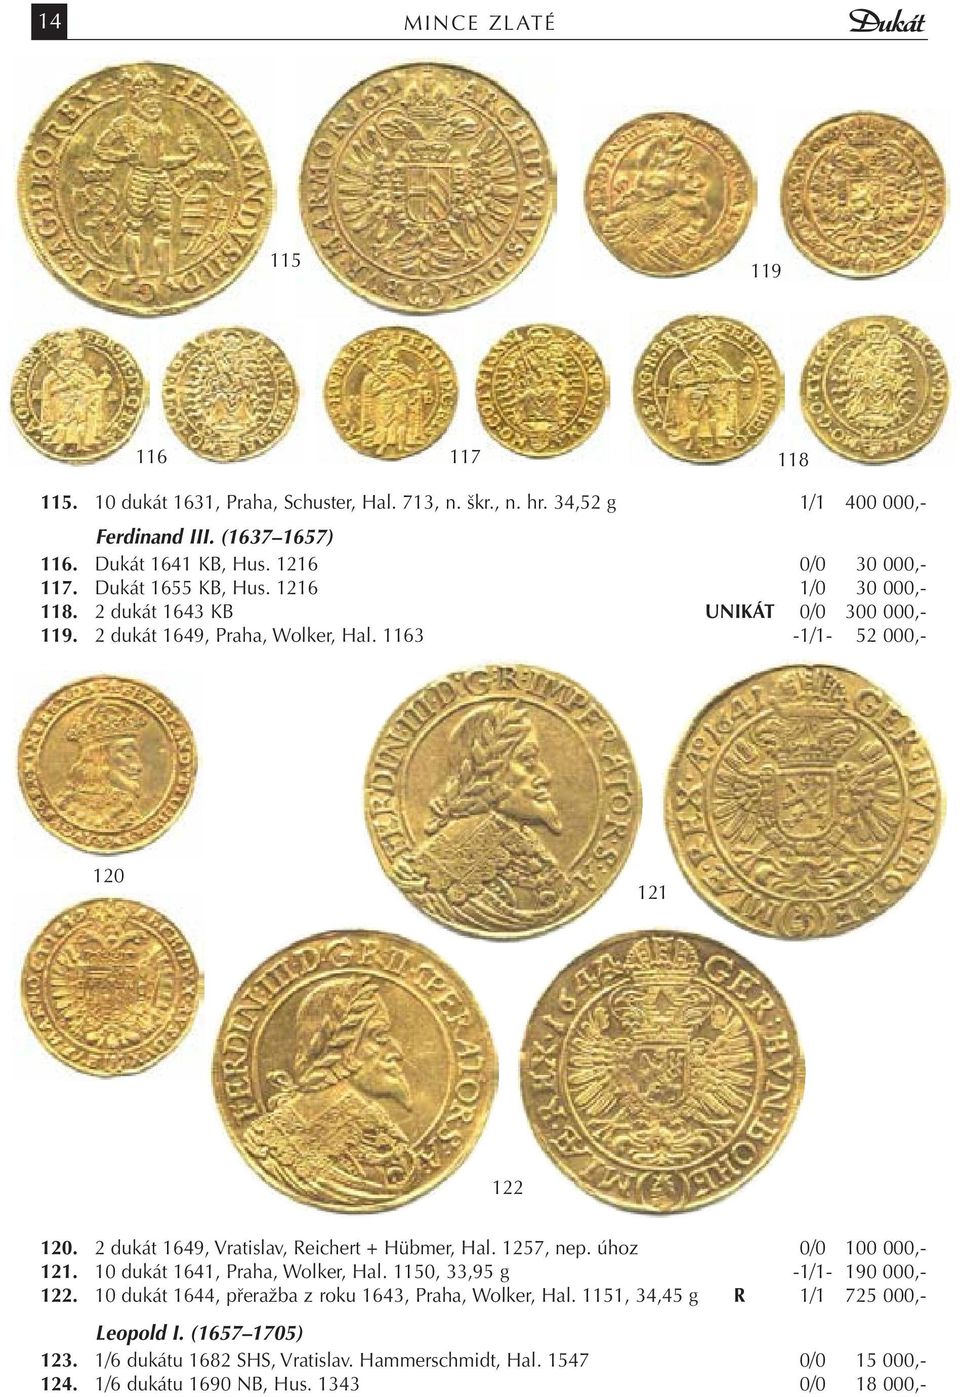 2 dukát 1649, Vratislav, Reichert + Hübmer, Hal. 1257, nep. úhoz 0/0 100 000,- 121. 10 dukát 1641, Praha, Wolker, Hal. 1150, 33,95 g -1/1-190 000,- 122.